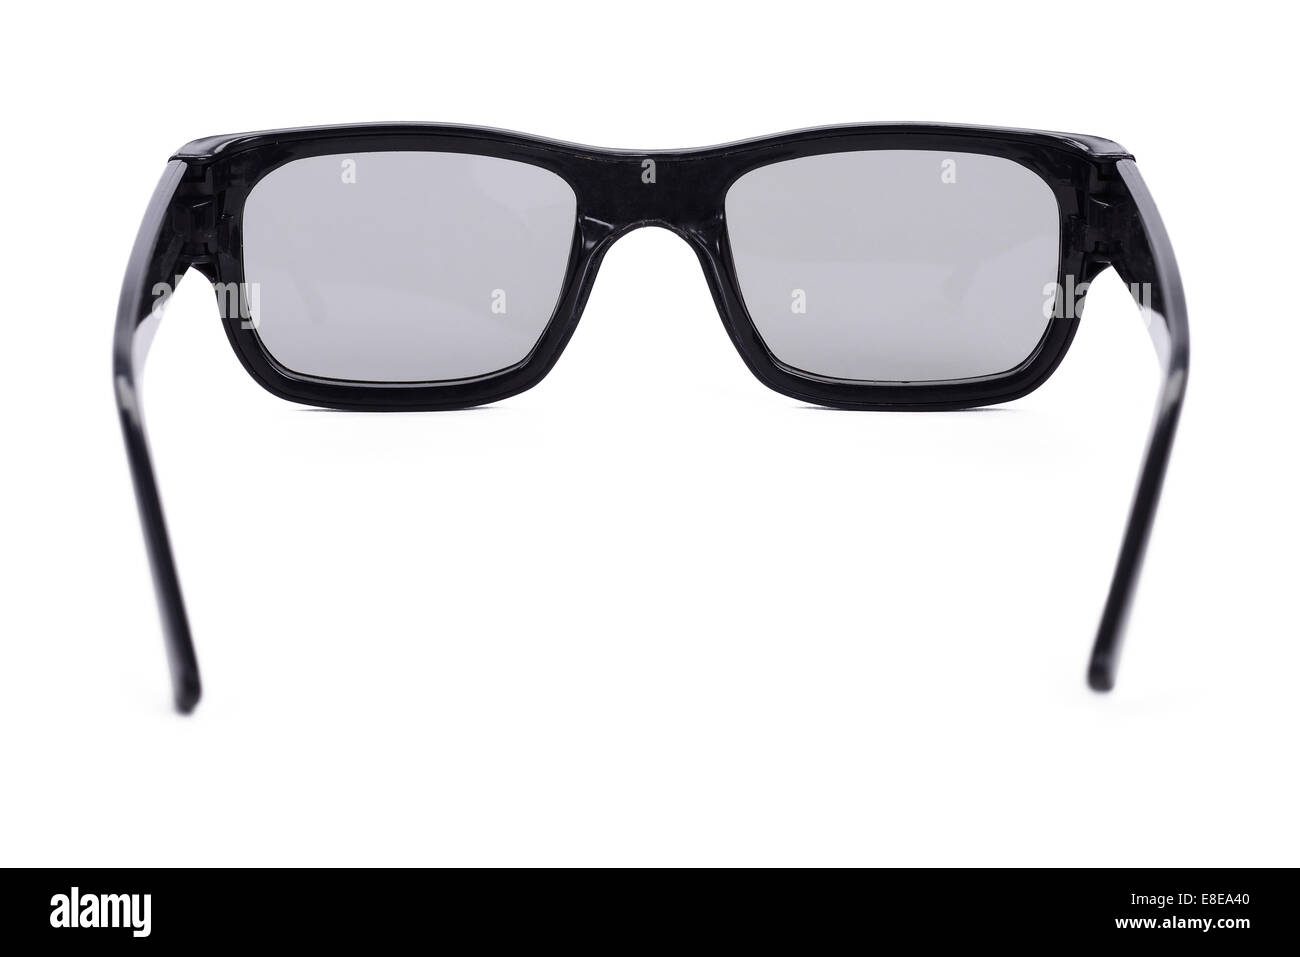 Par de gafas 3D polarizadas Fotografía de stock - Alamy